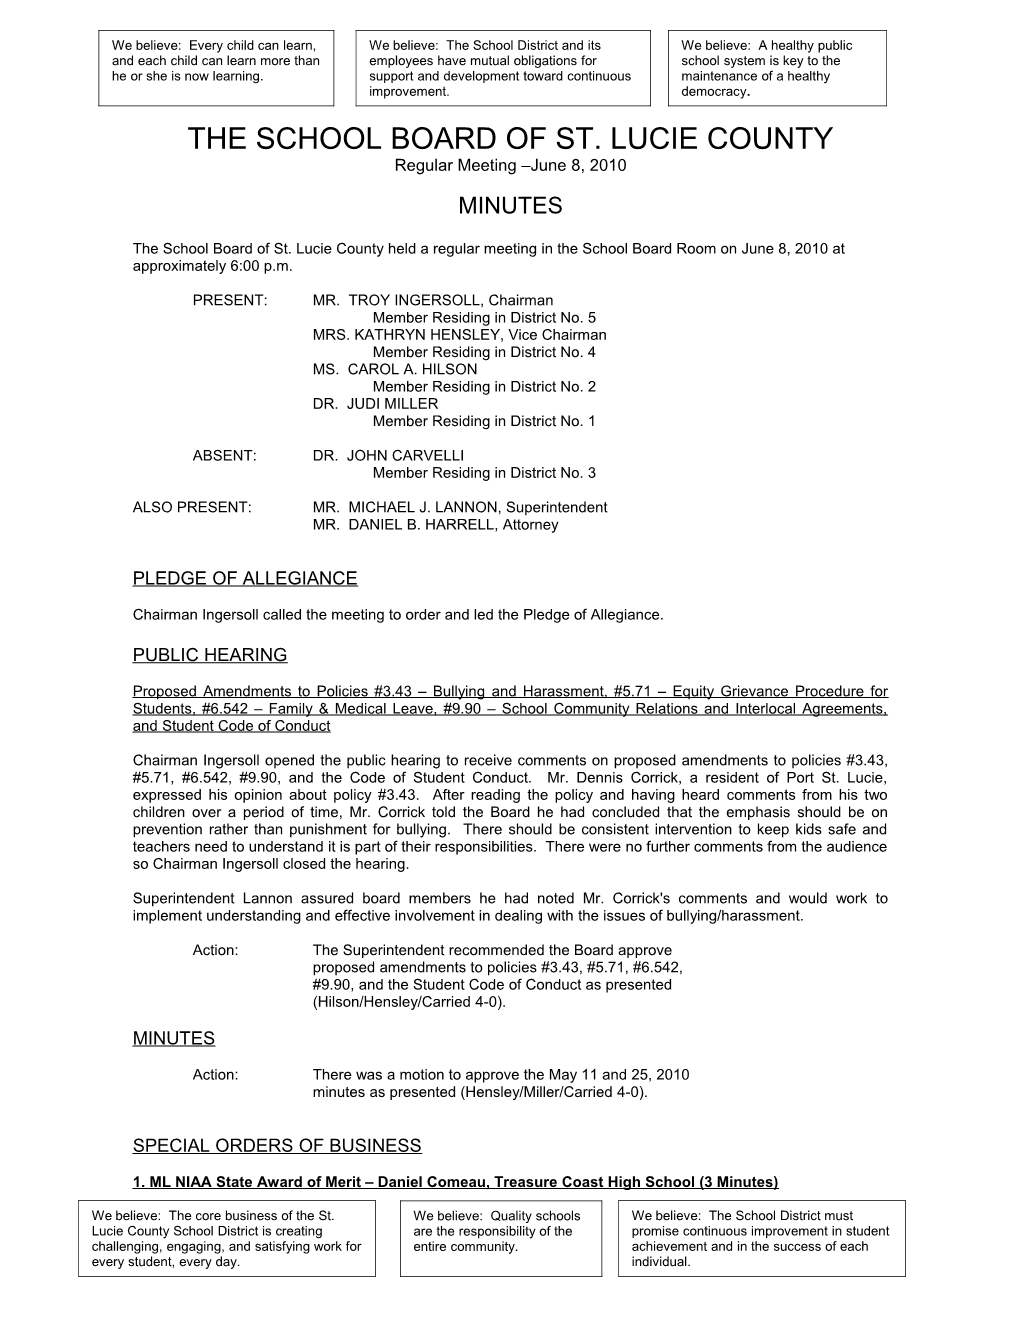 06-08-10 SLCSB Regular Meeting Minutes